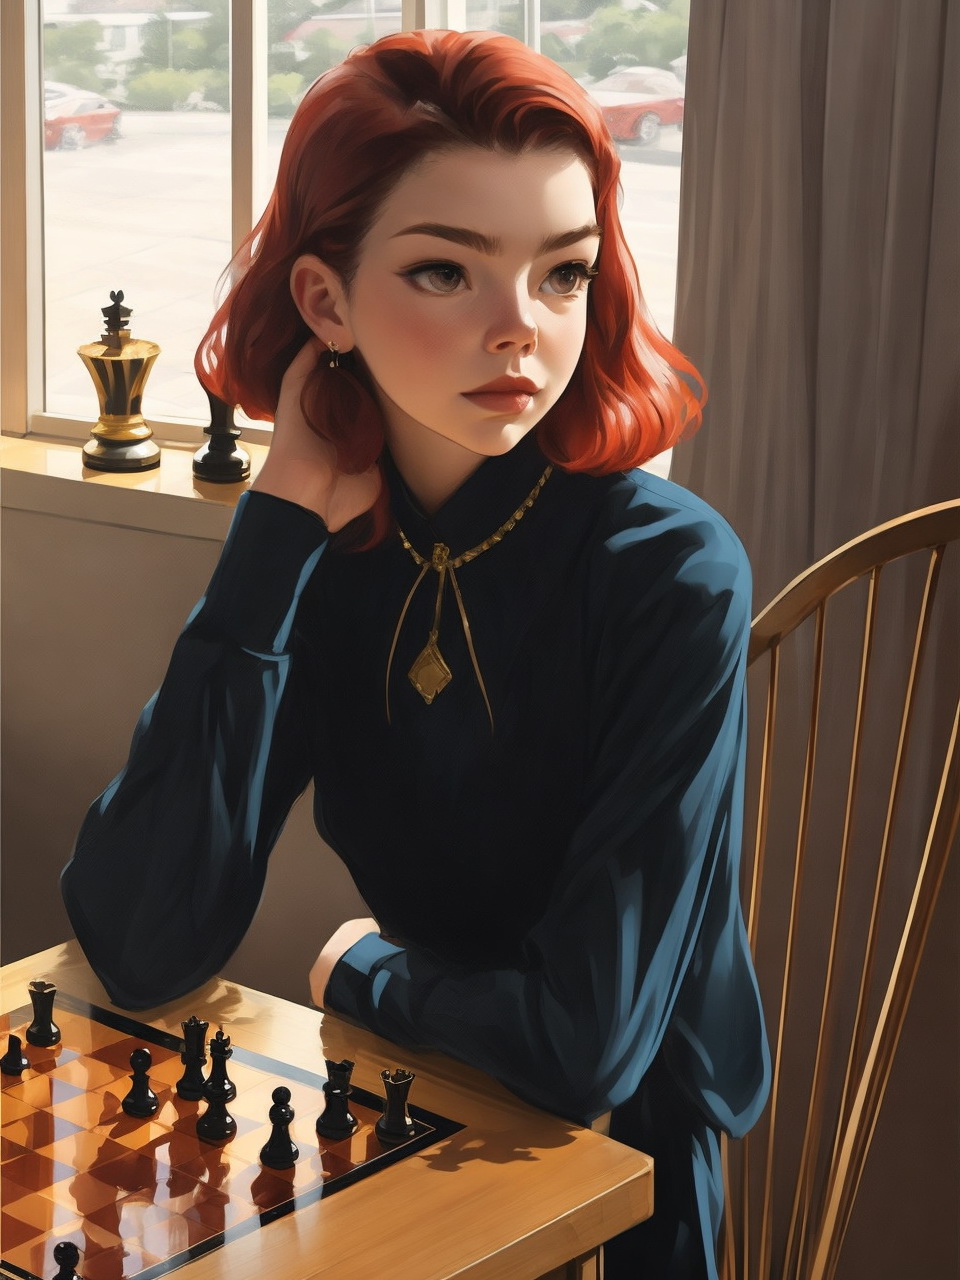 Beth Harmon (the Queen's gambit series) by ArtNuova on DeviantArt